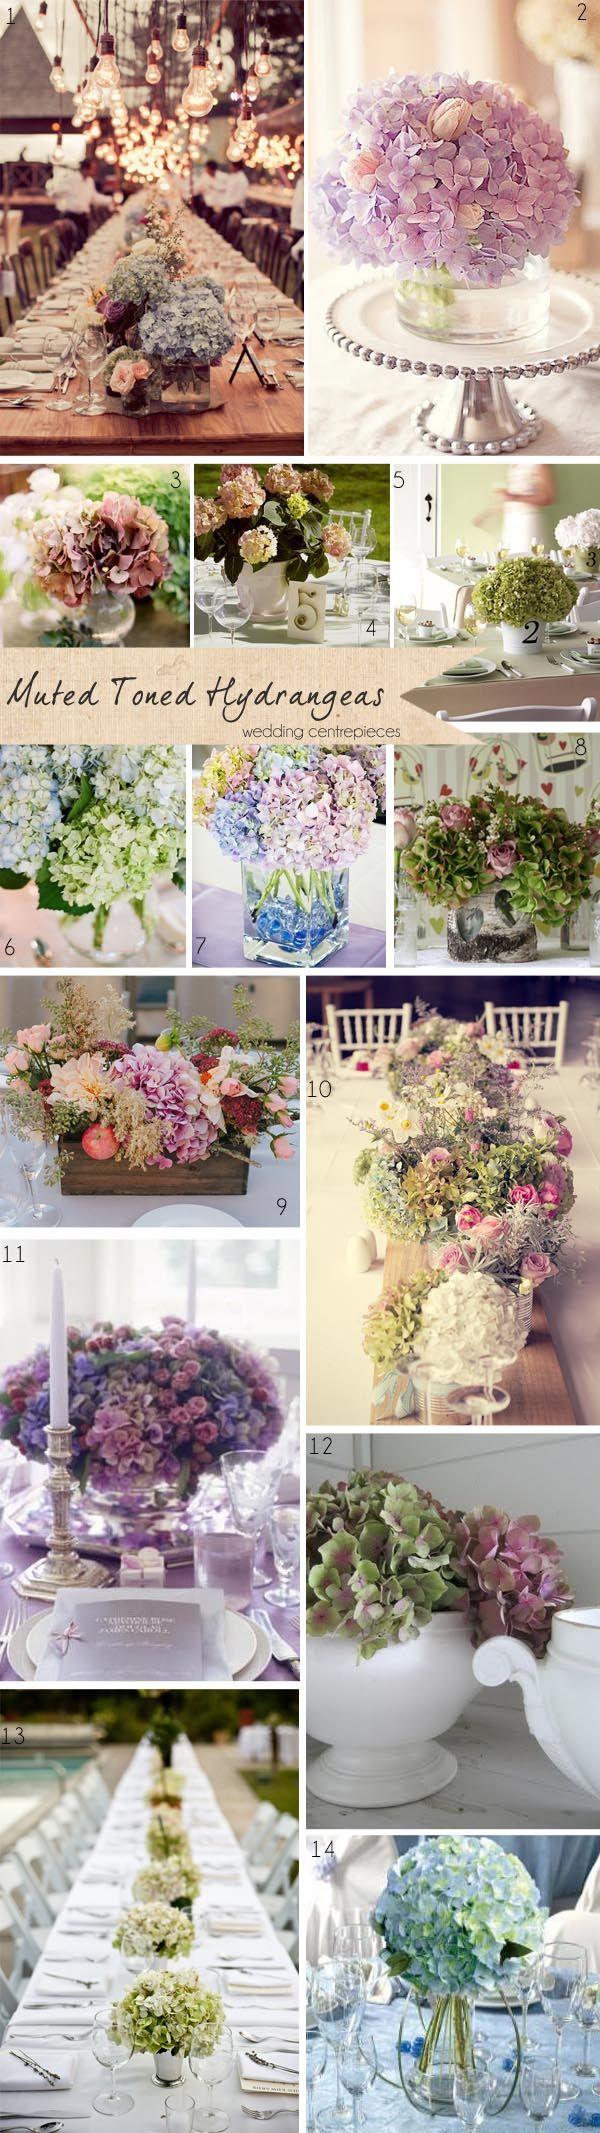 زفاف - Muted Toned Hydrangeas ~ Get To Know Your Wedding Flowers